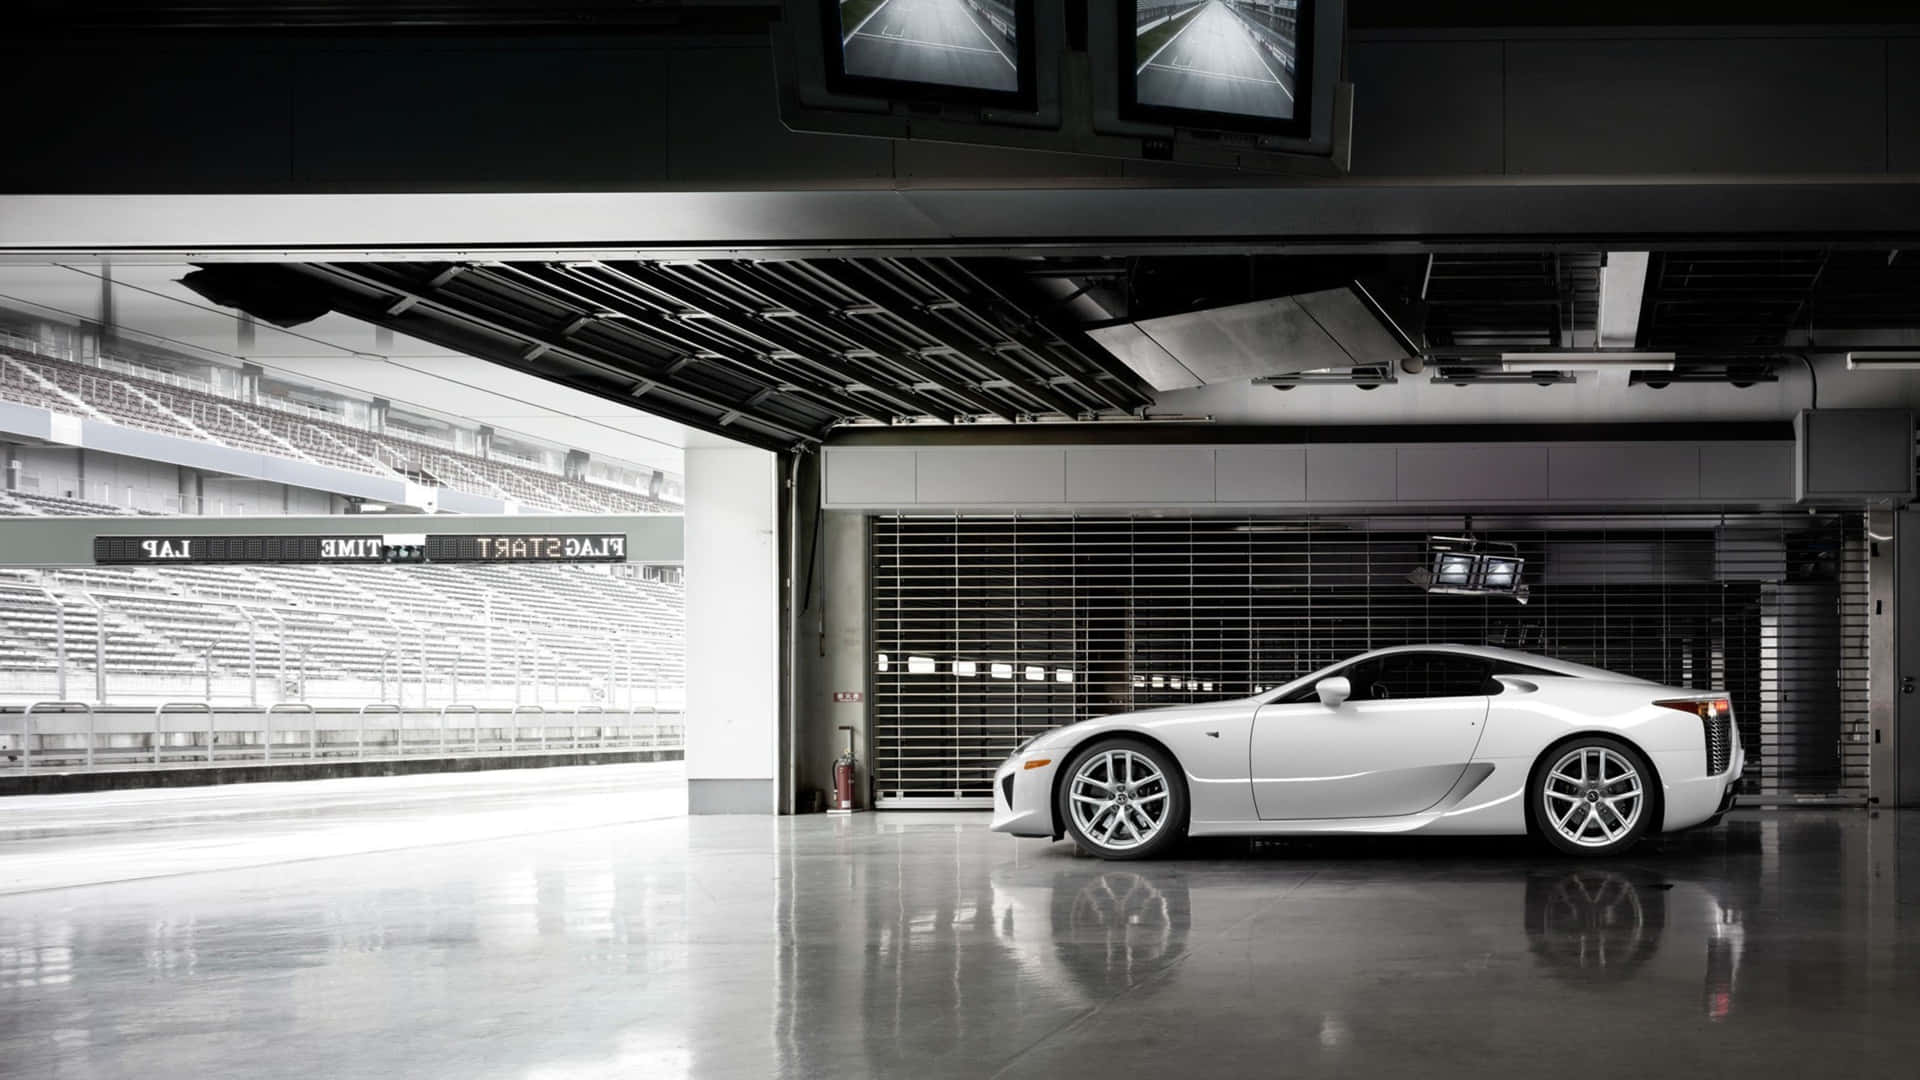 Sleek Lexus LFA Sports Car in High Resolution Wallpaper